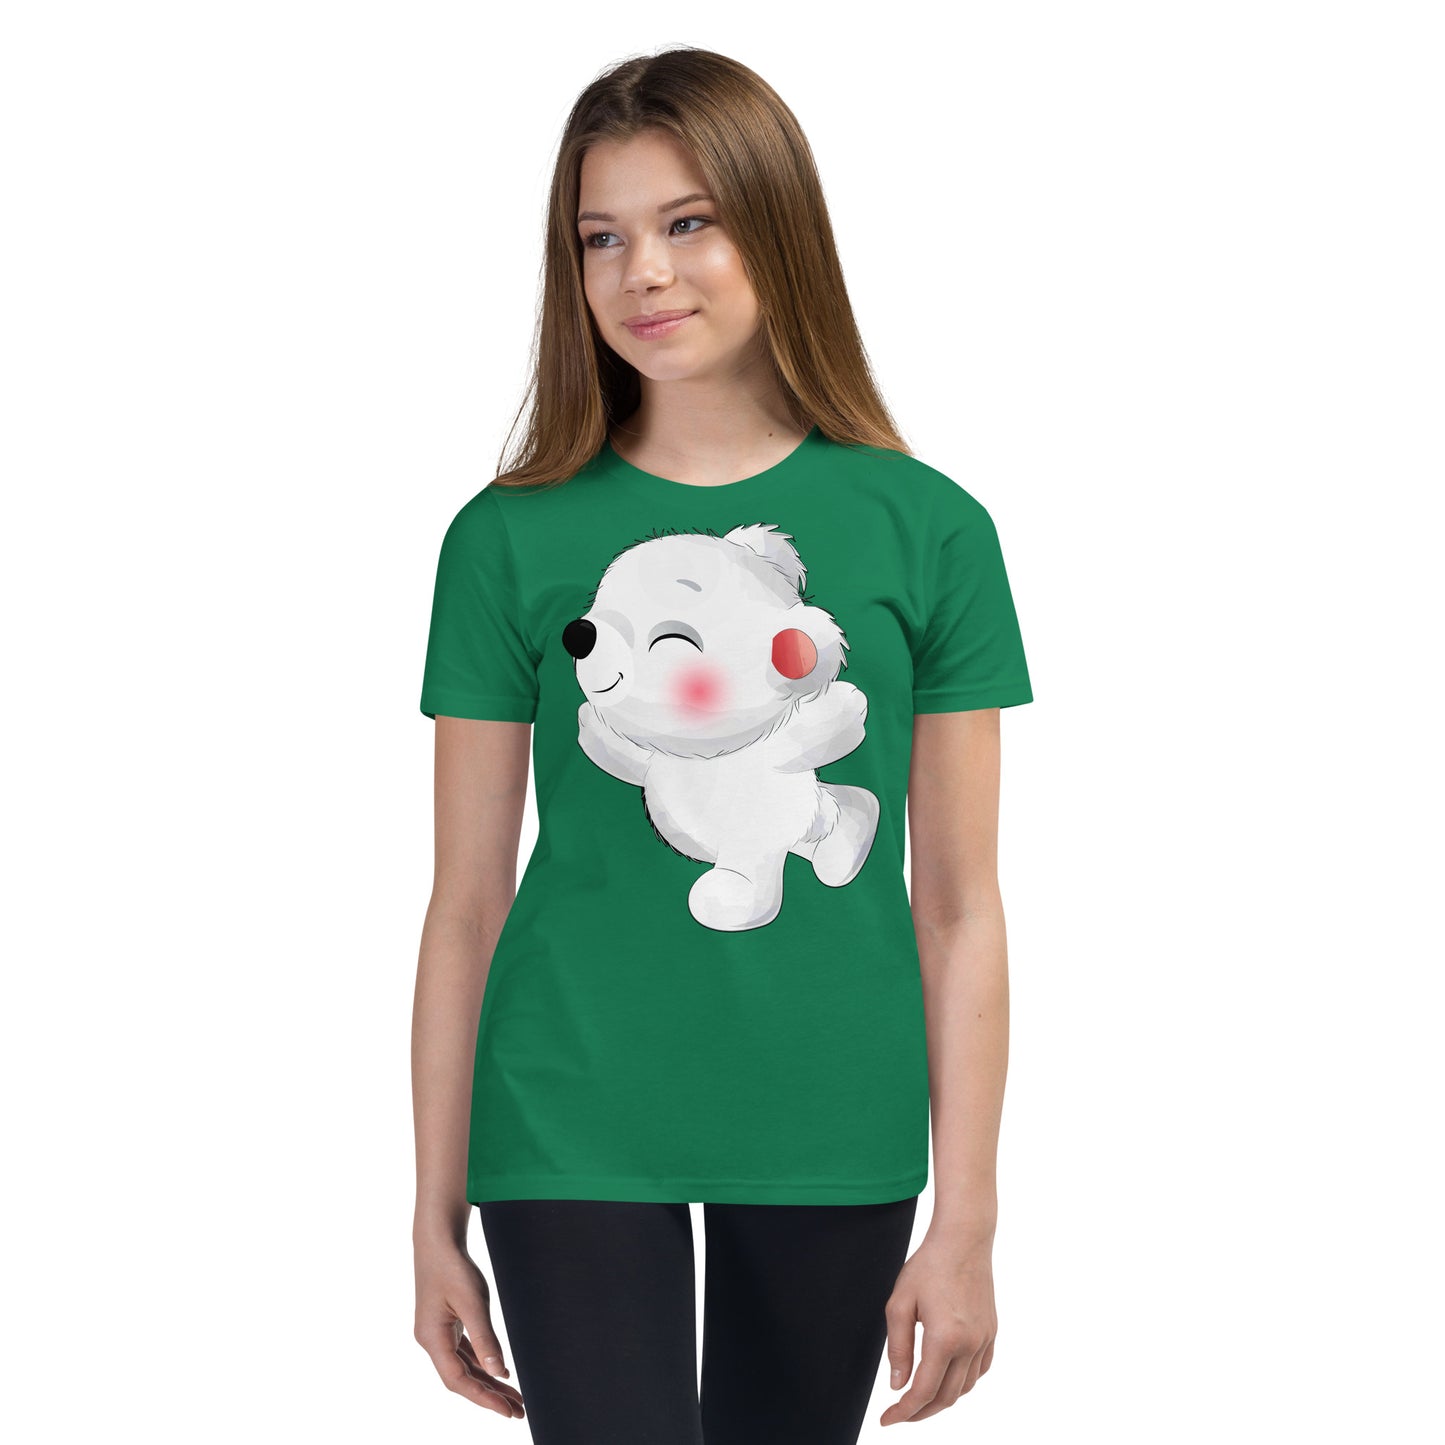 Delightful Polar Bear T-shirt, No. 0022